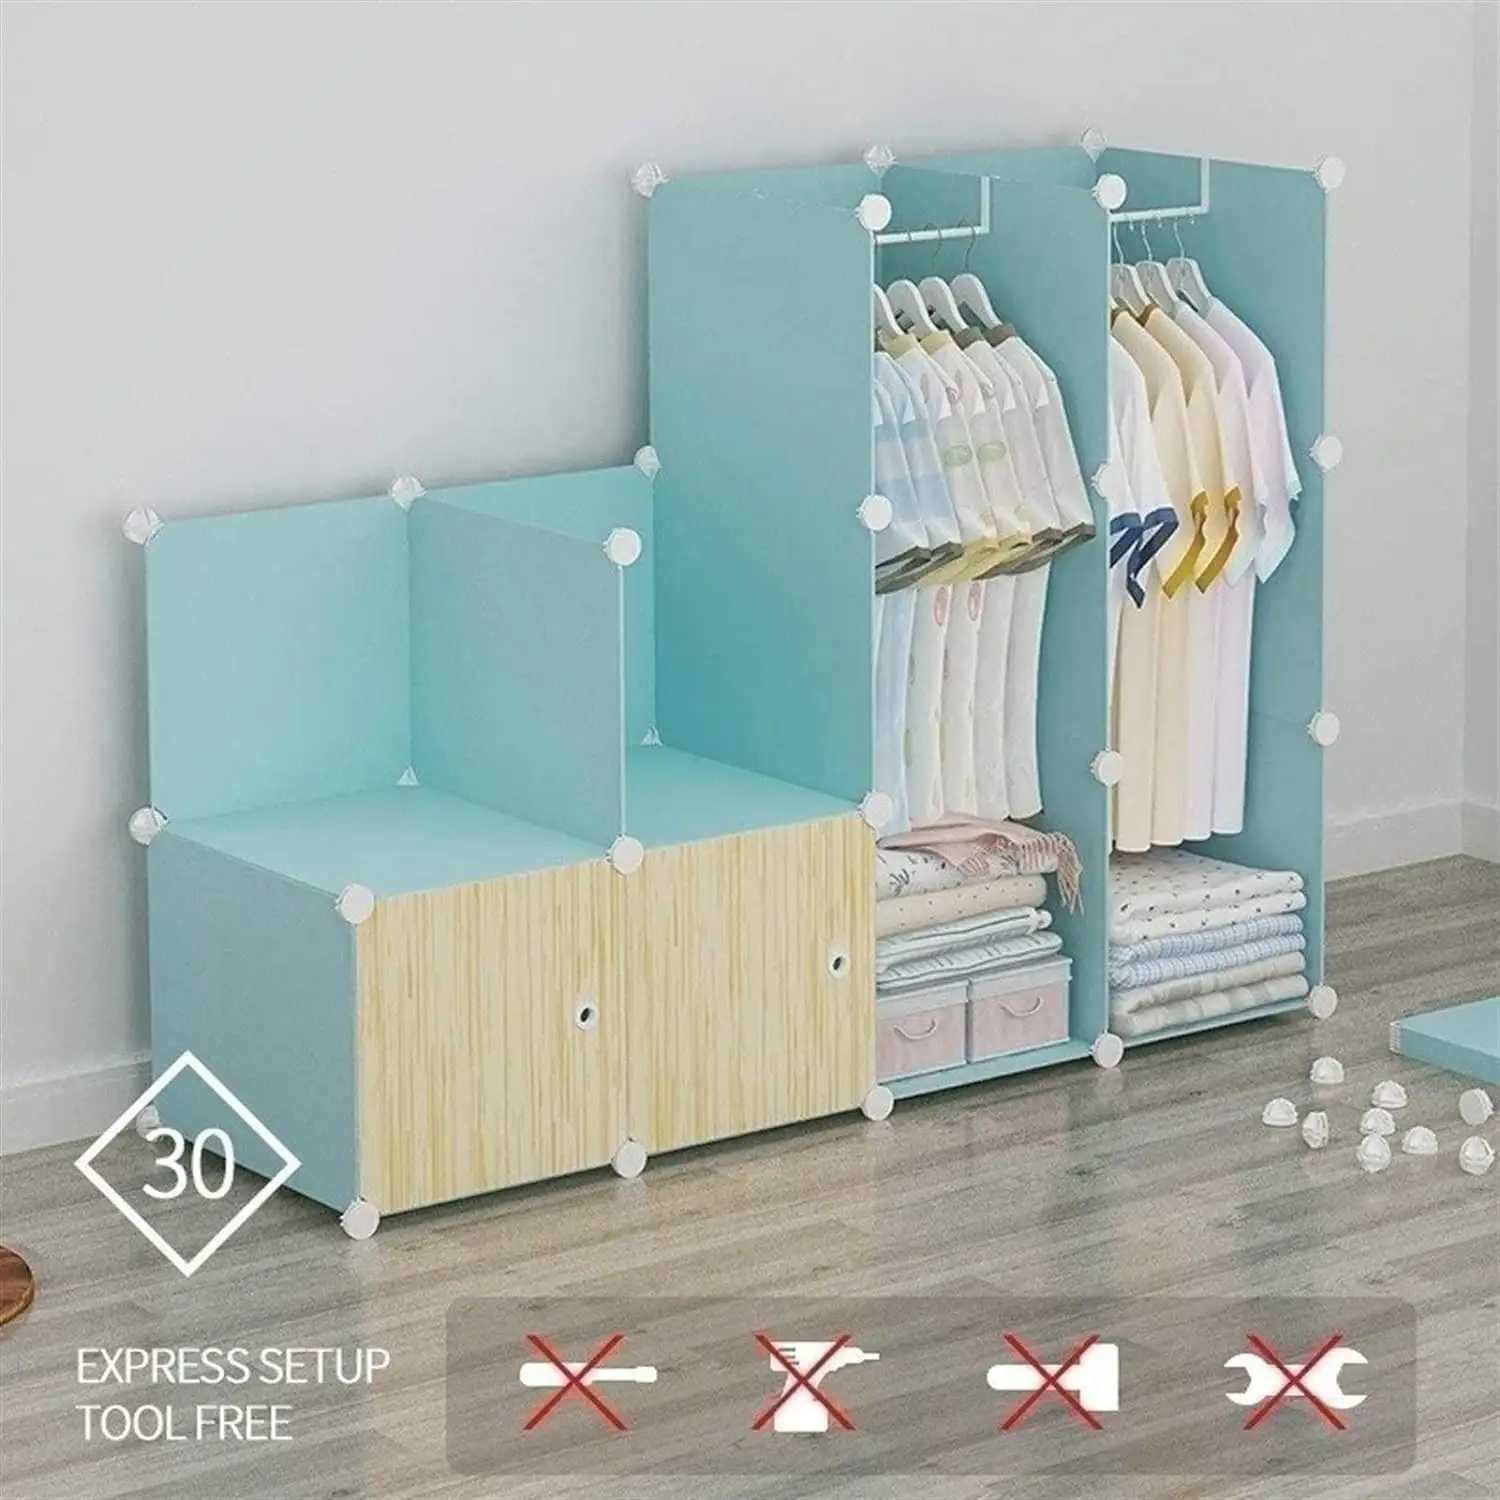 DIY cartoon kids wardrobe child hanging clothes wardrobe self combine simple cabinet bedroom storage box